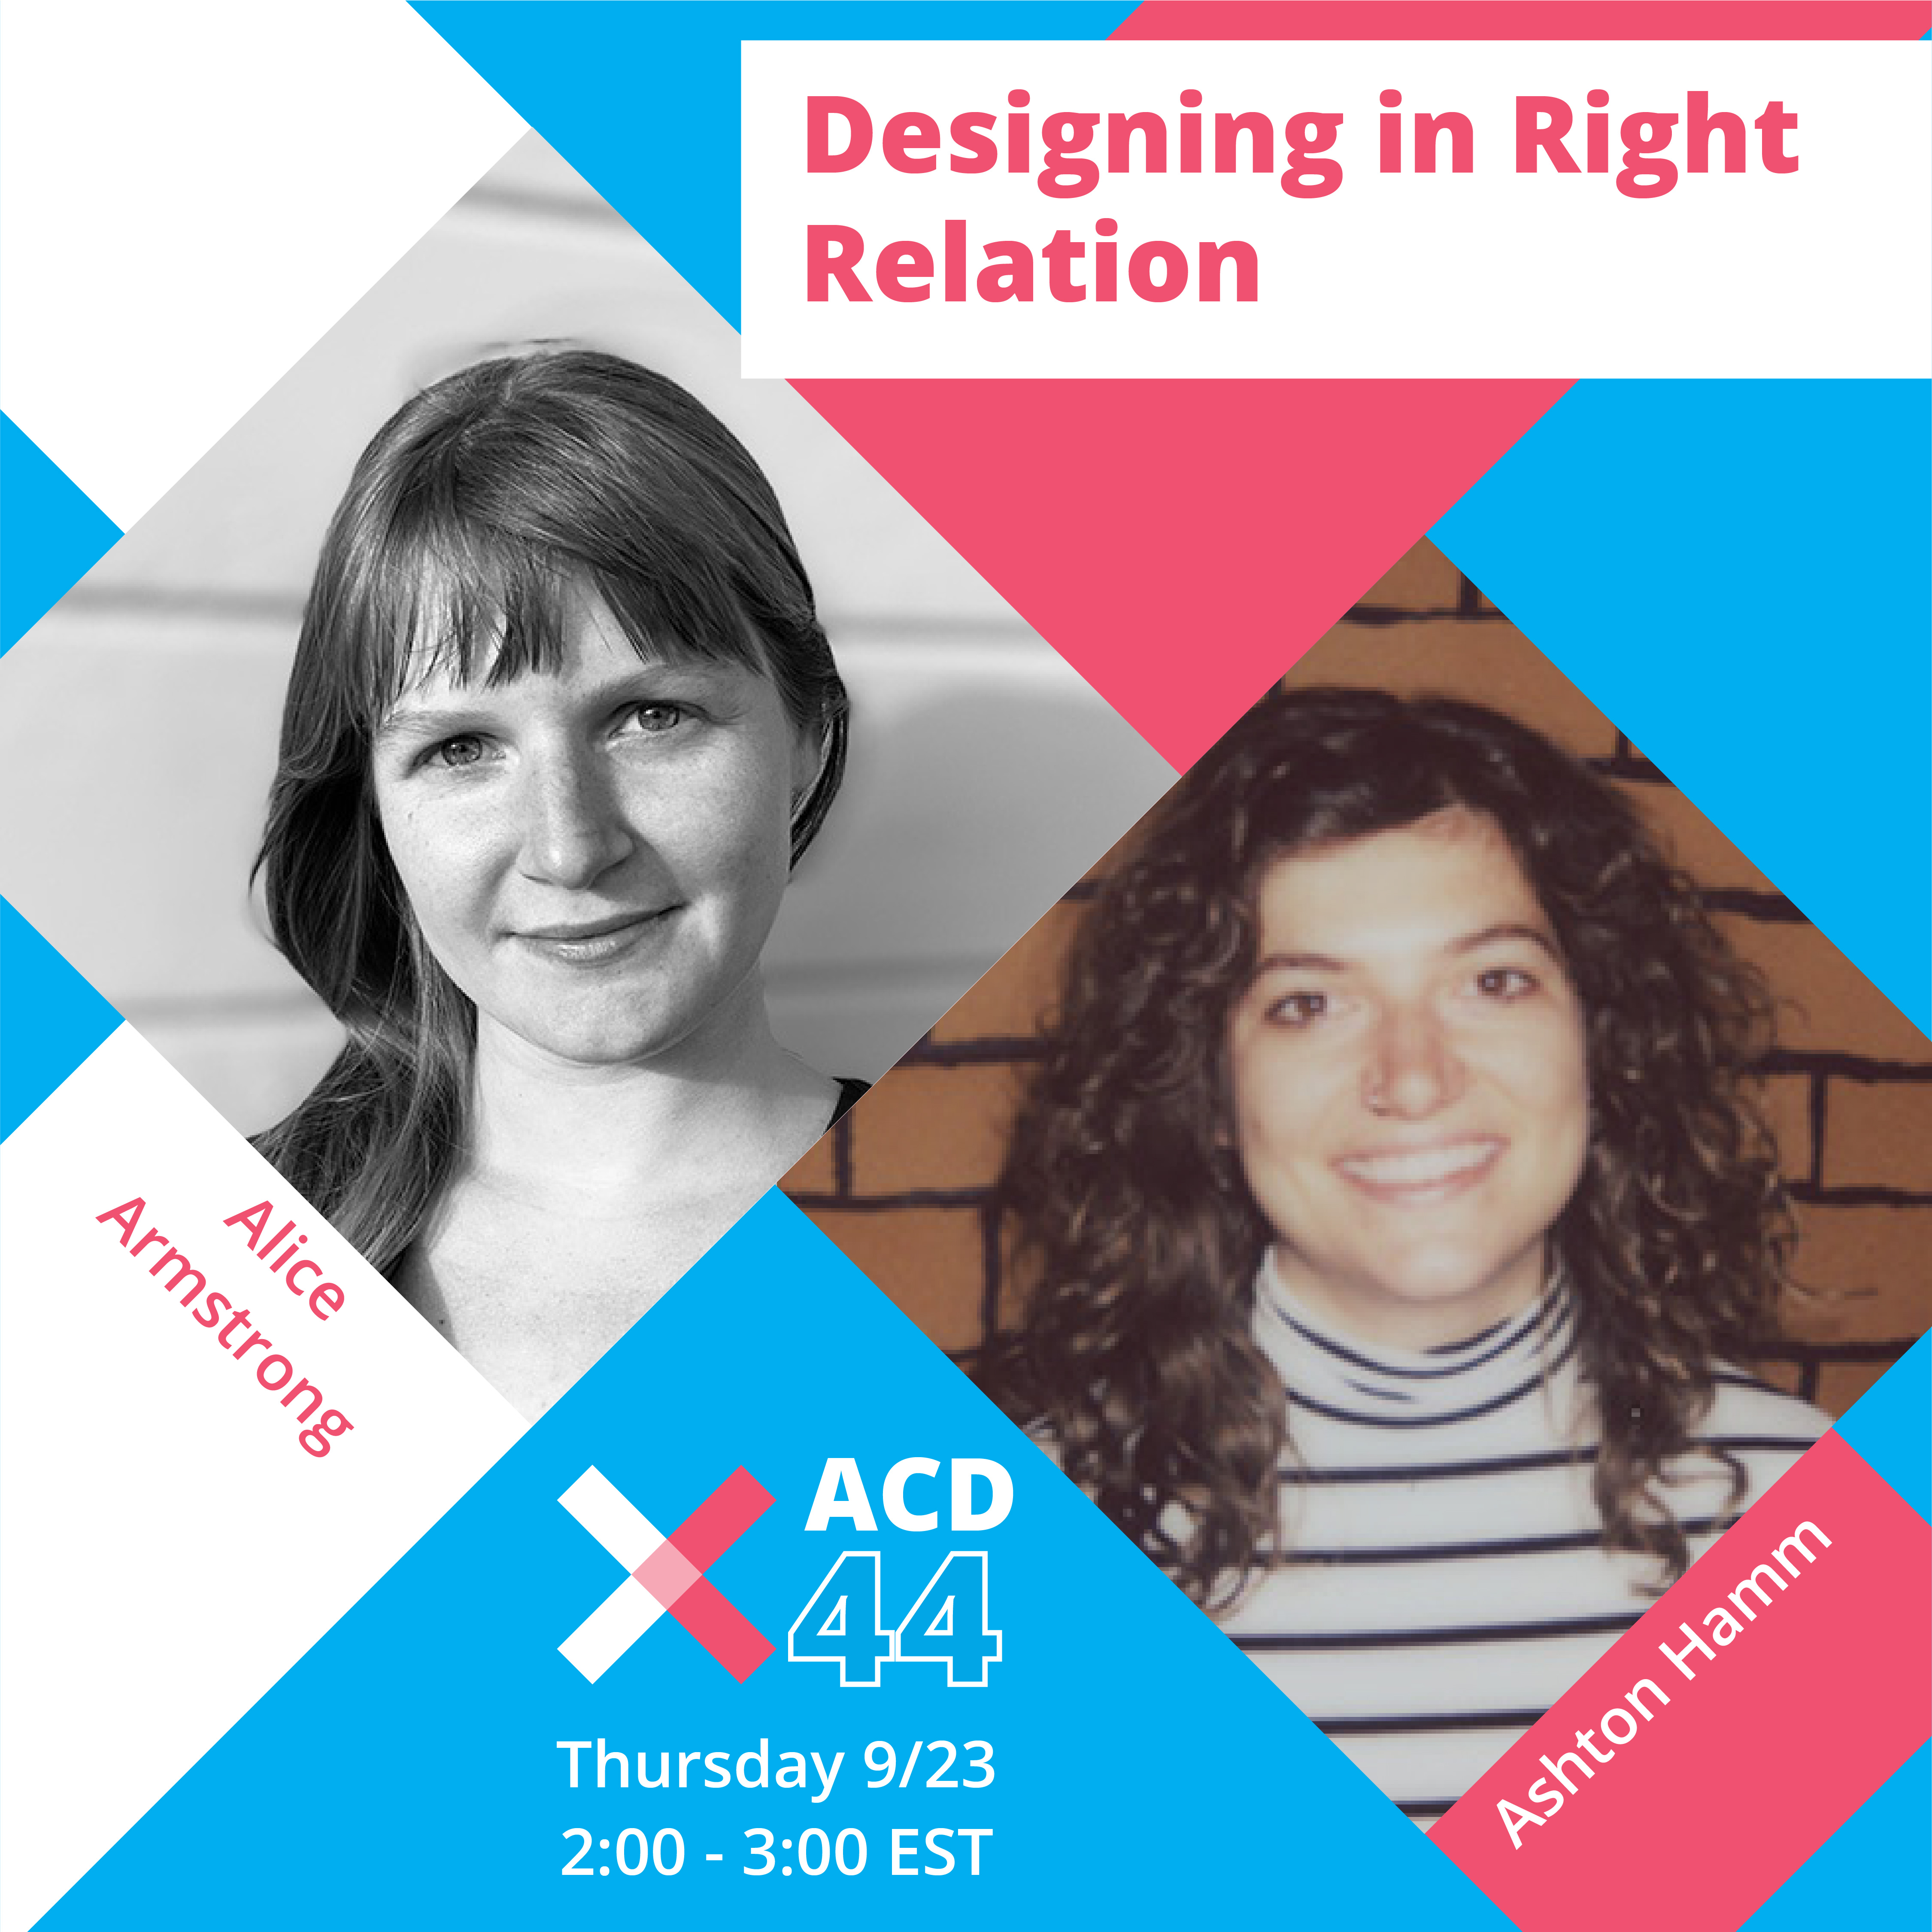 ACD2021: PechaKucha Designing in Right Relation